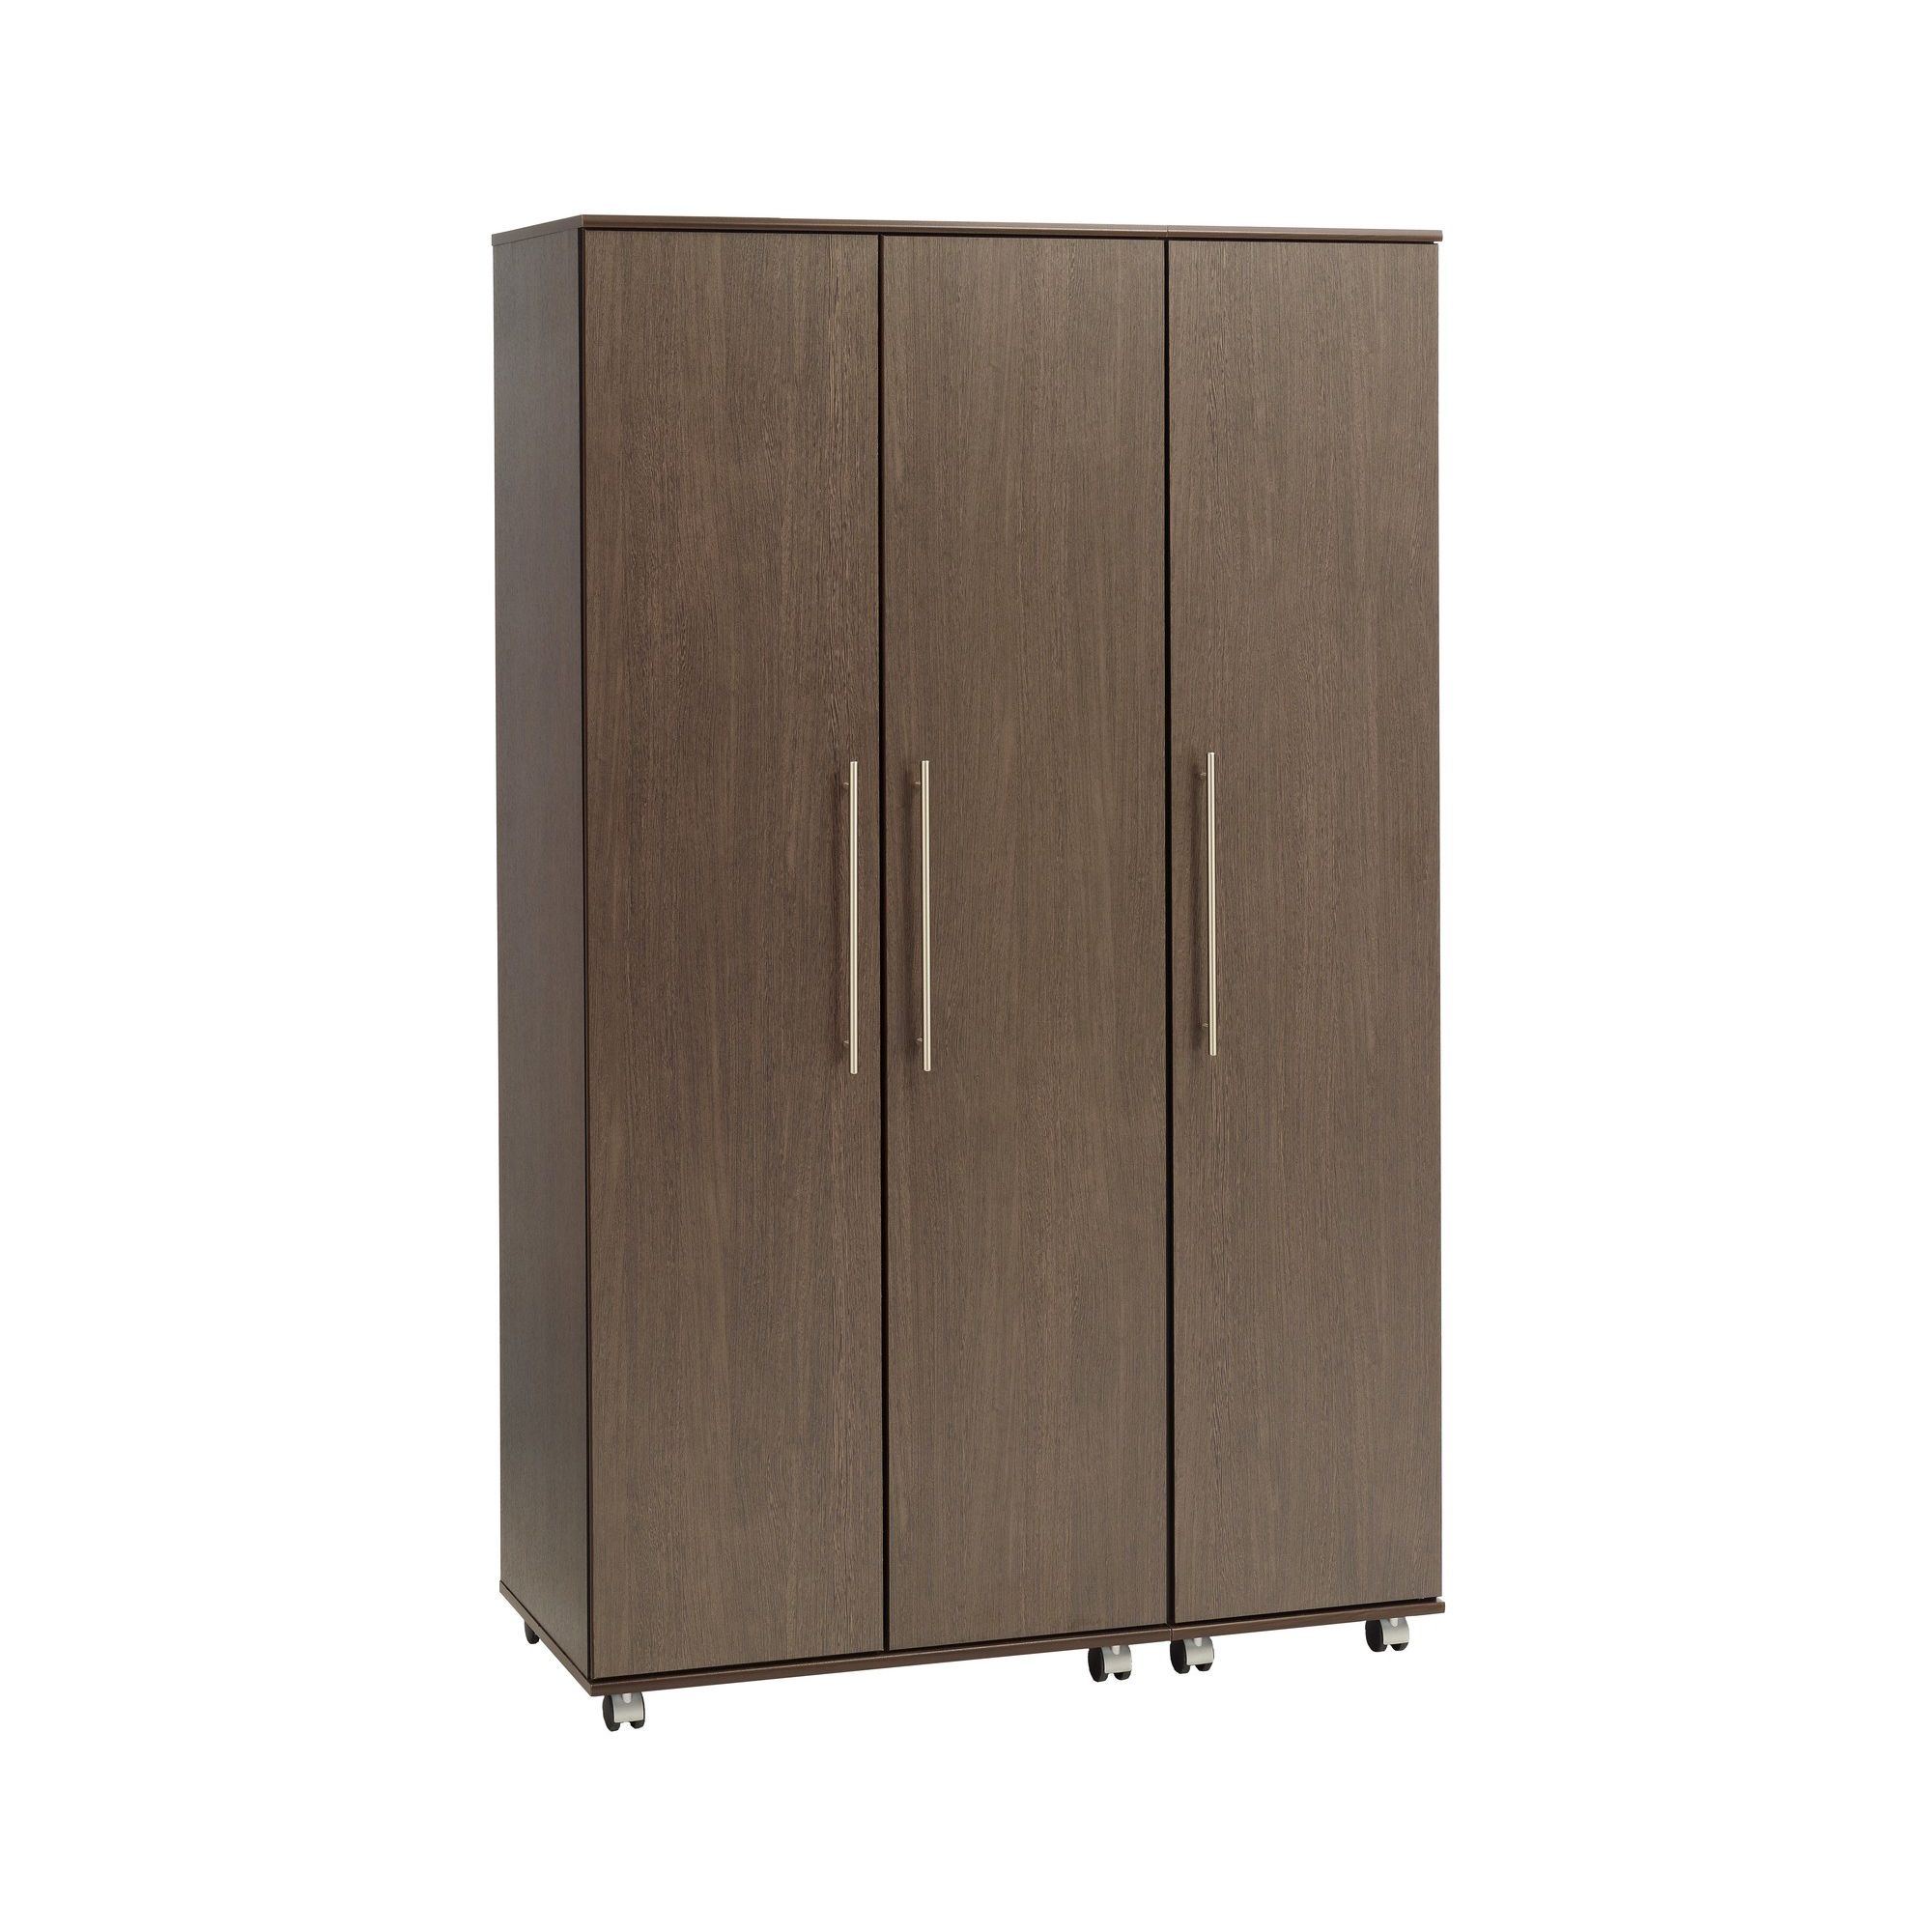 Ideal Furniture New York Triple Plain Wardrobe - Oak at Tesco Direct